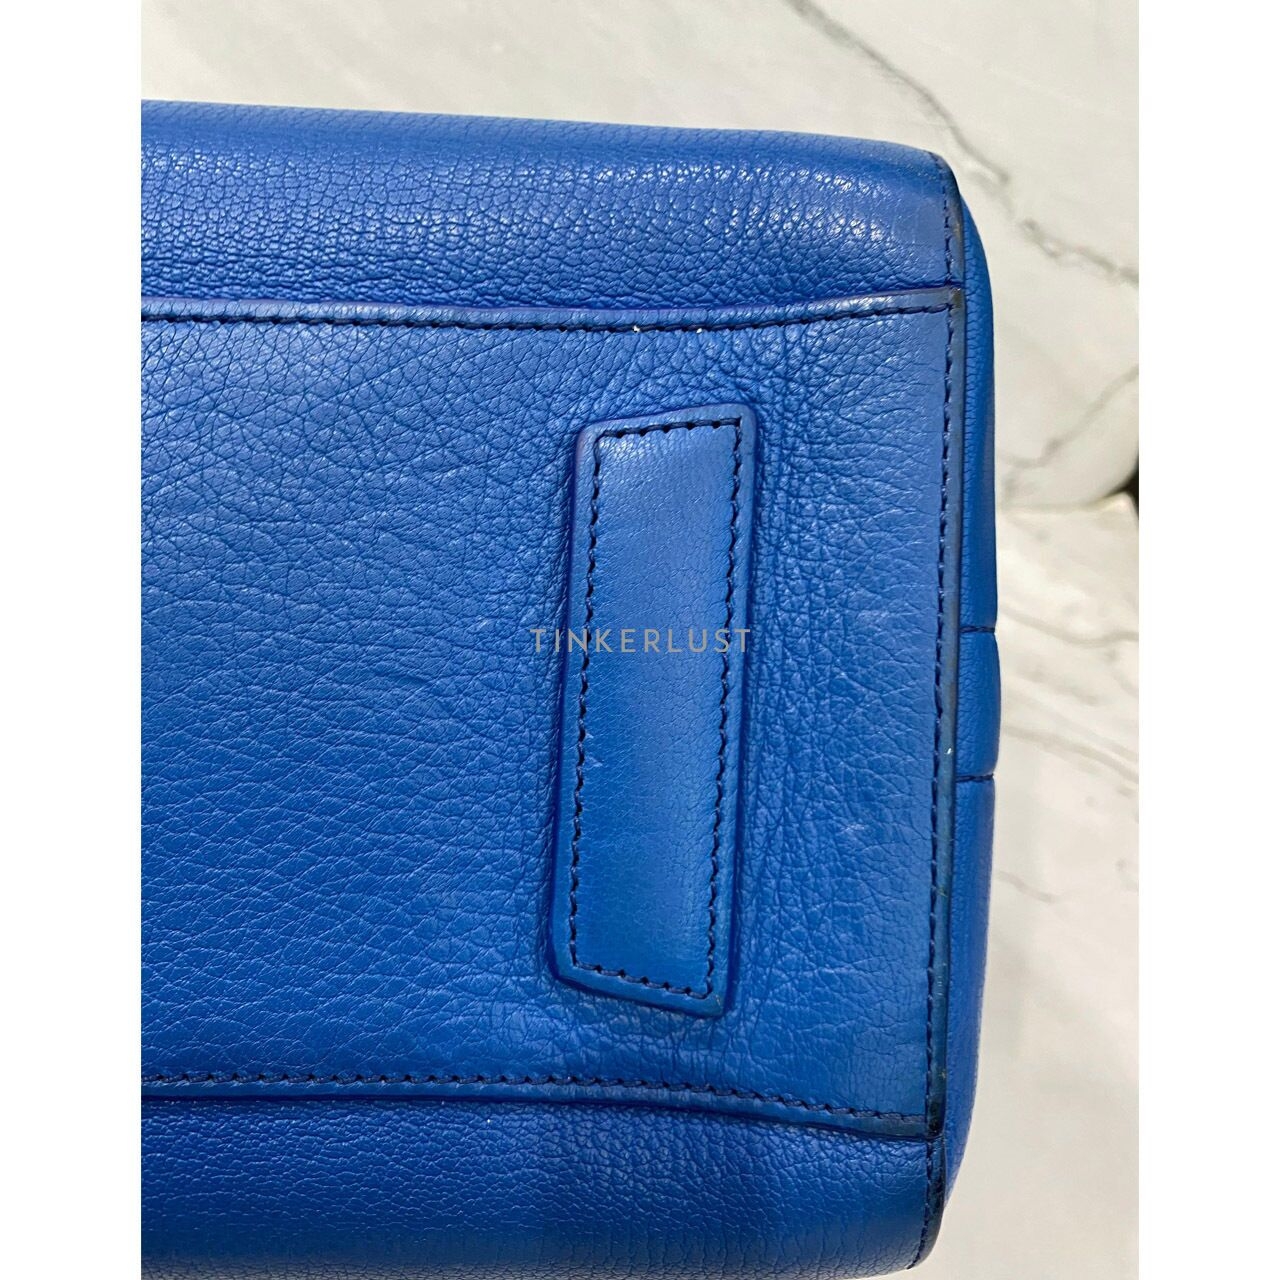 Givenchy Antigona Small Bag Blue Satchel